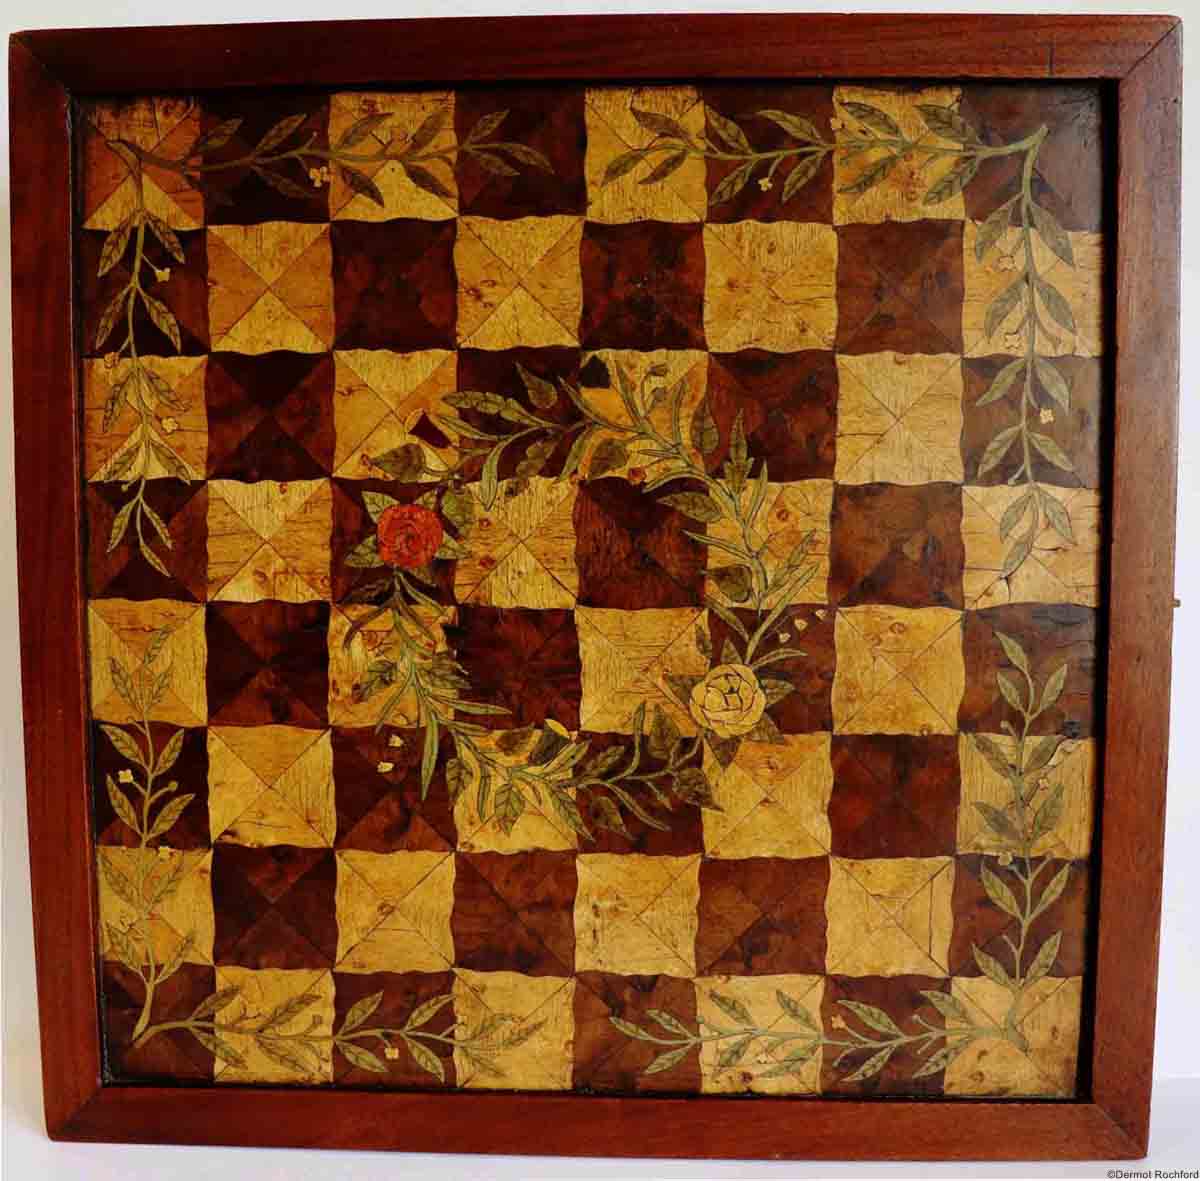 Antique Italin Chess Board